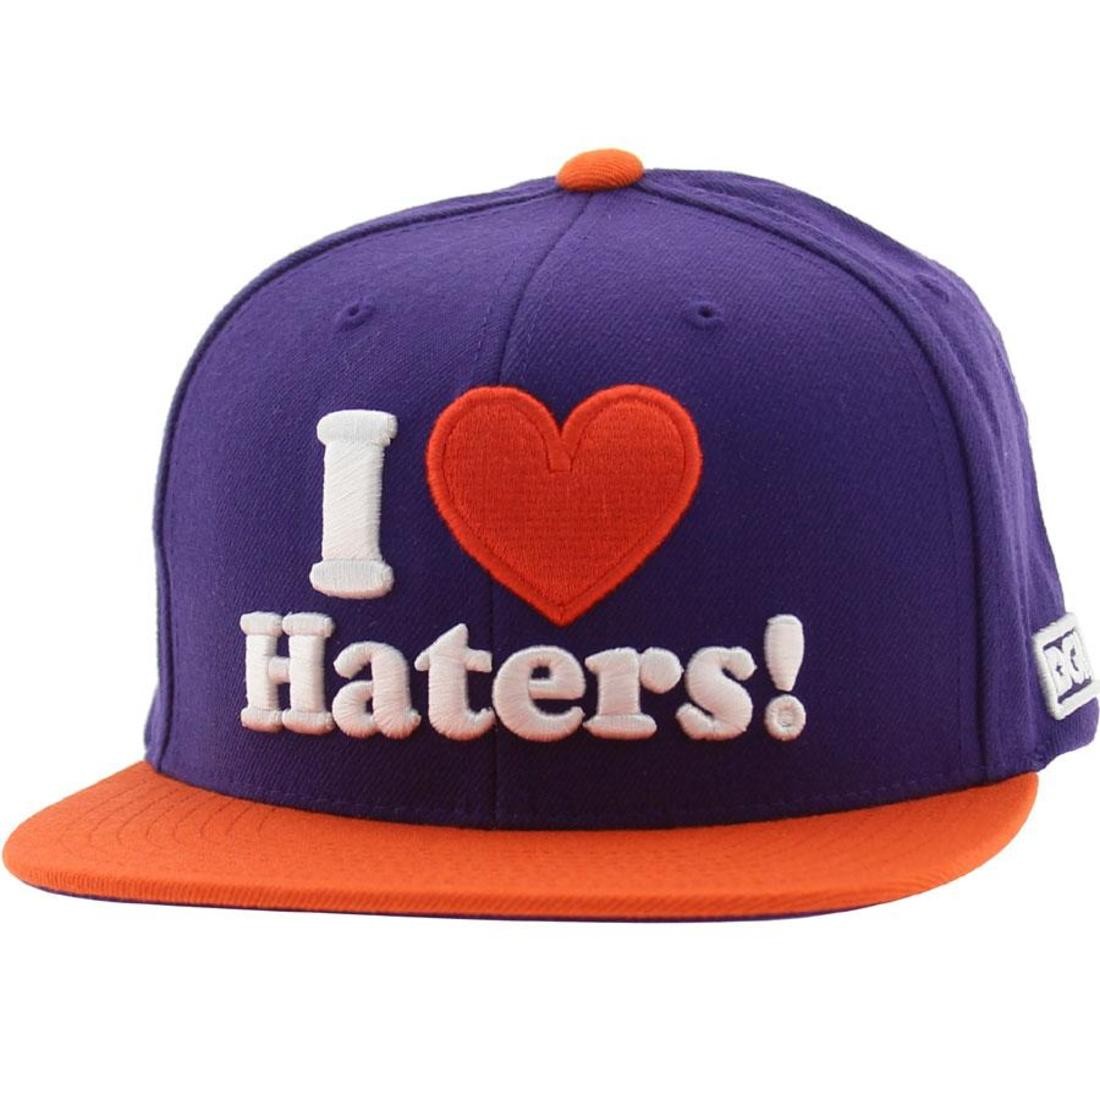 DGK Haters Snapback Cap (purple / orange)